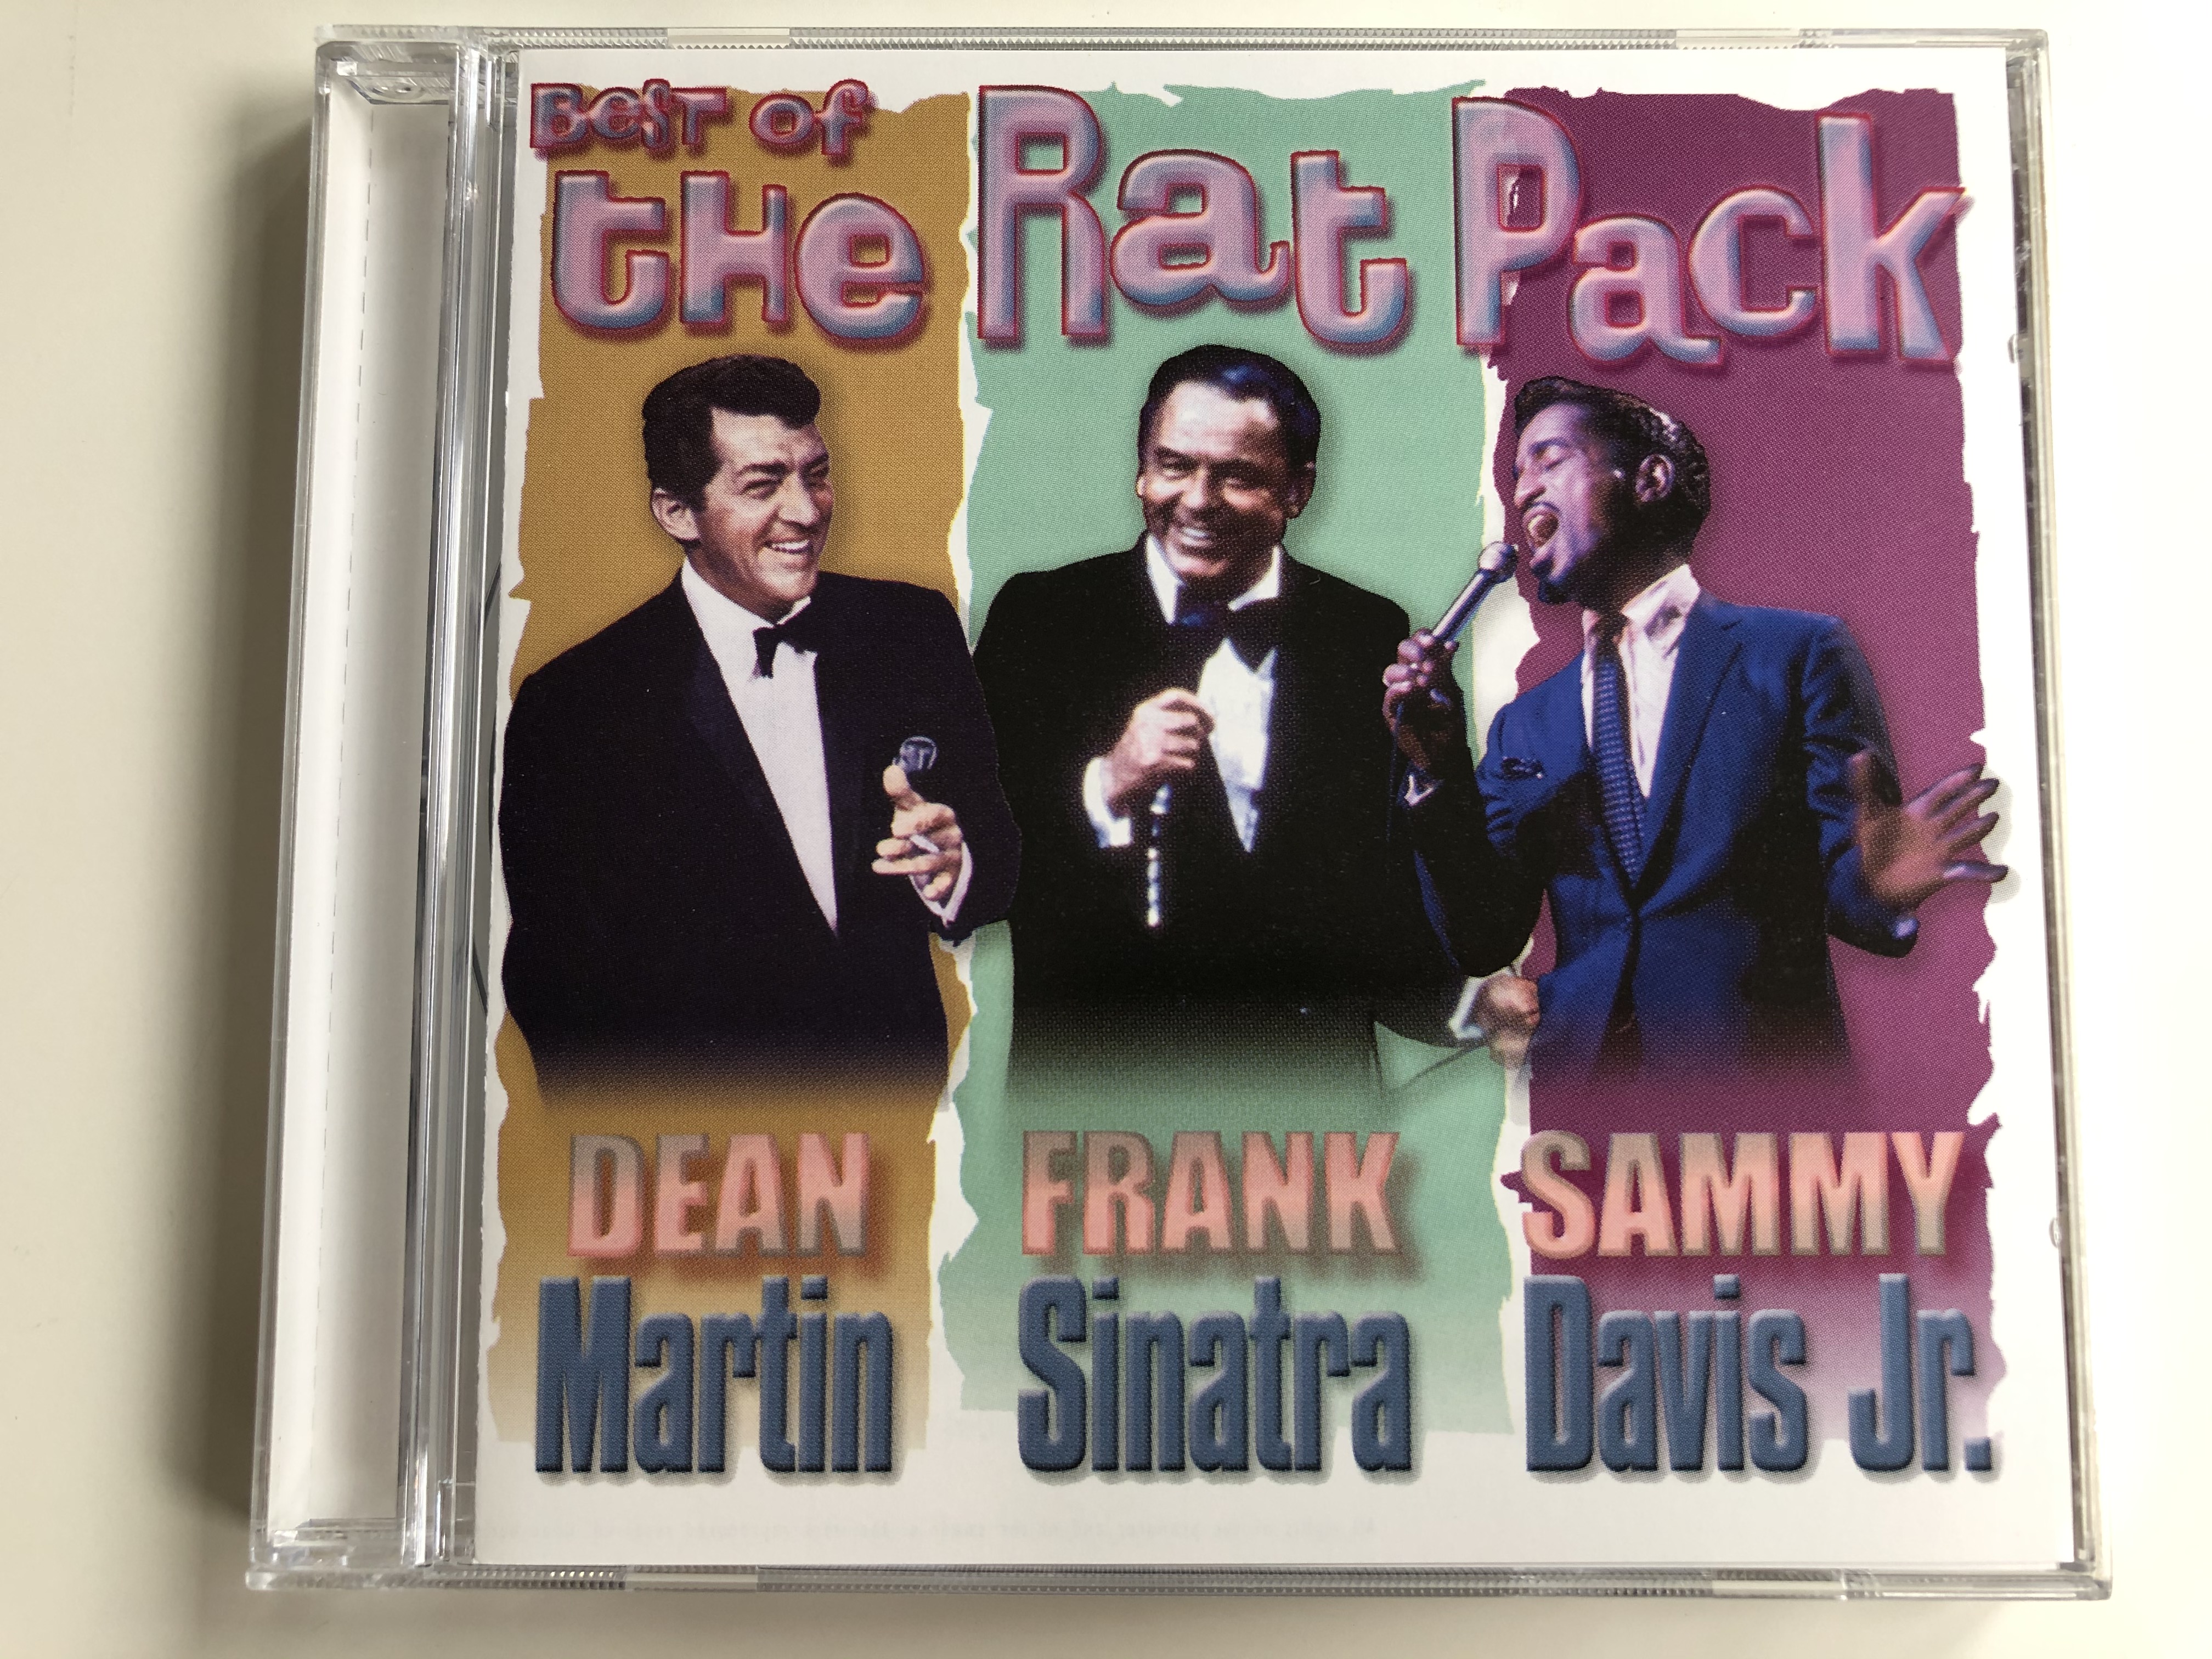 best-of-the-rat-pack-dean-martin-frank-sinatra-sammy-davis-jr.-sanctuary-records-audio-cd-2002-pls-cd-624-1-.jpg